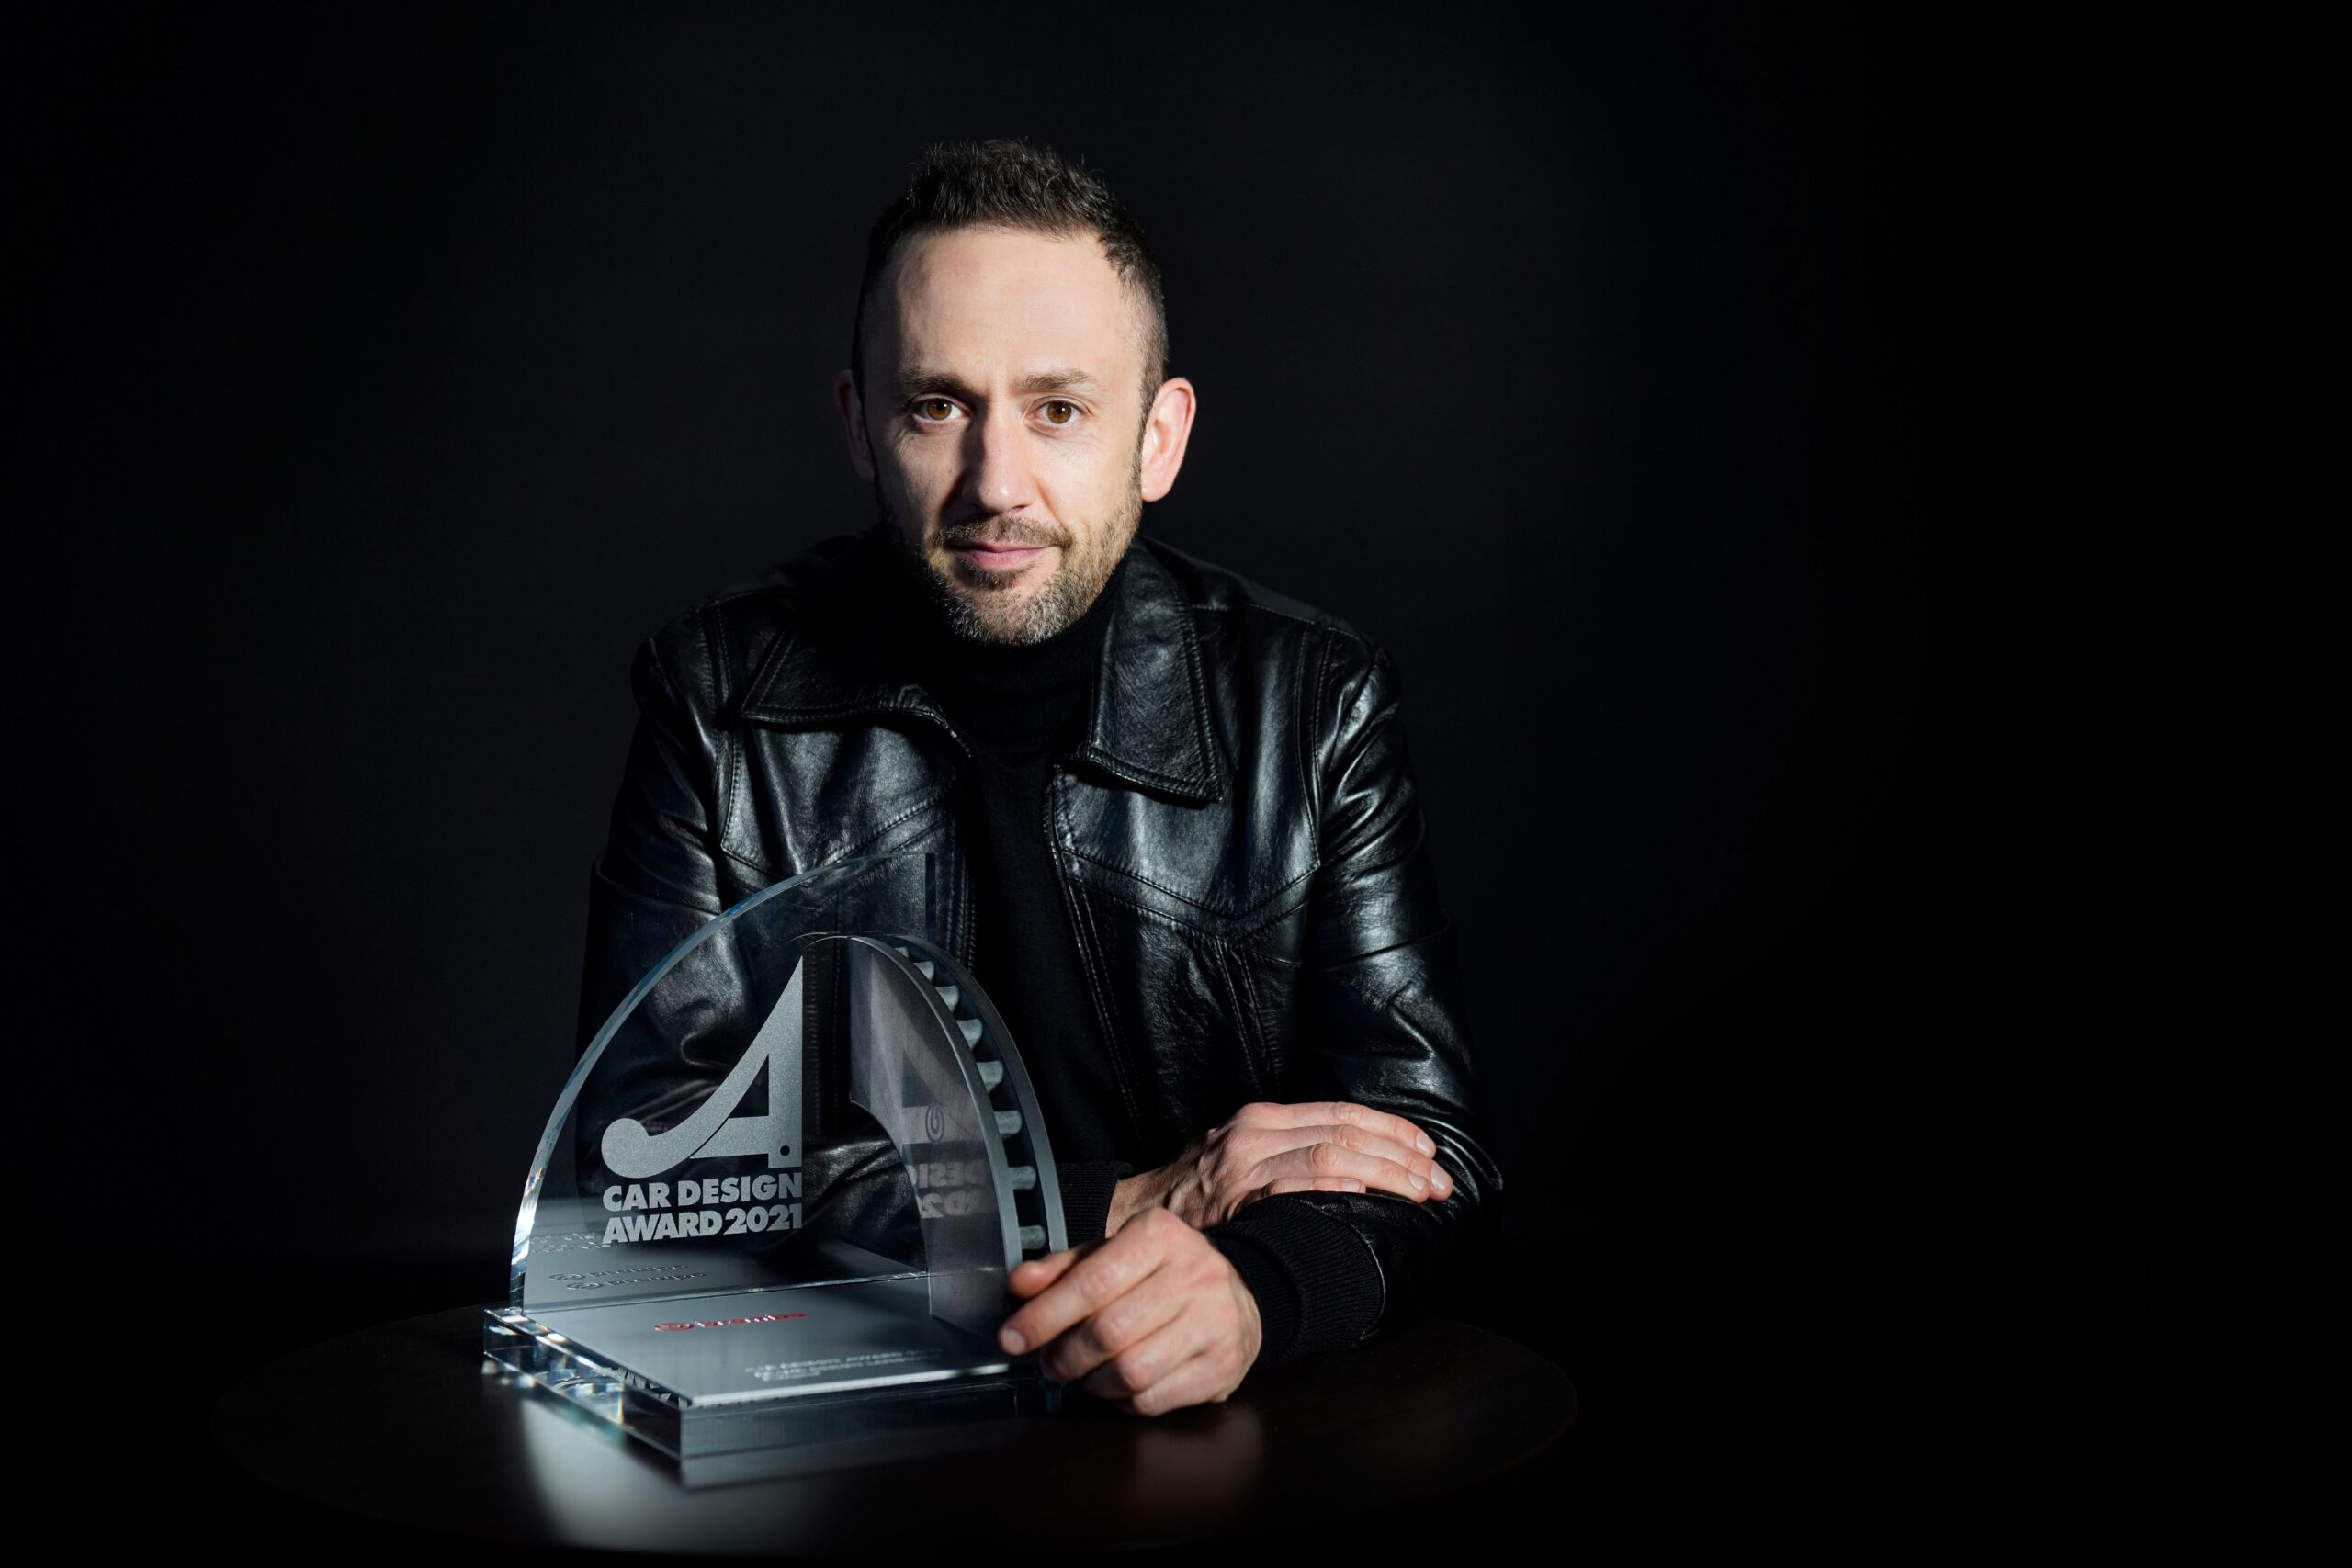 PEUGEOT - Mattias Hossann receives award for card design